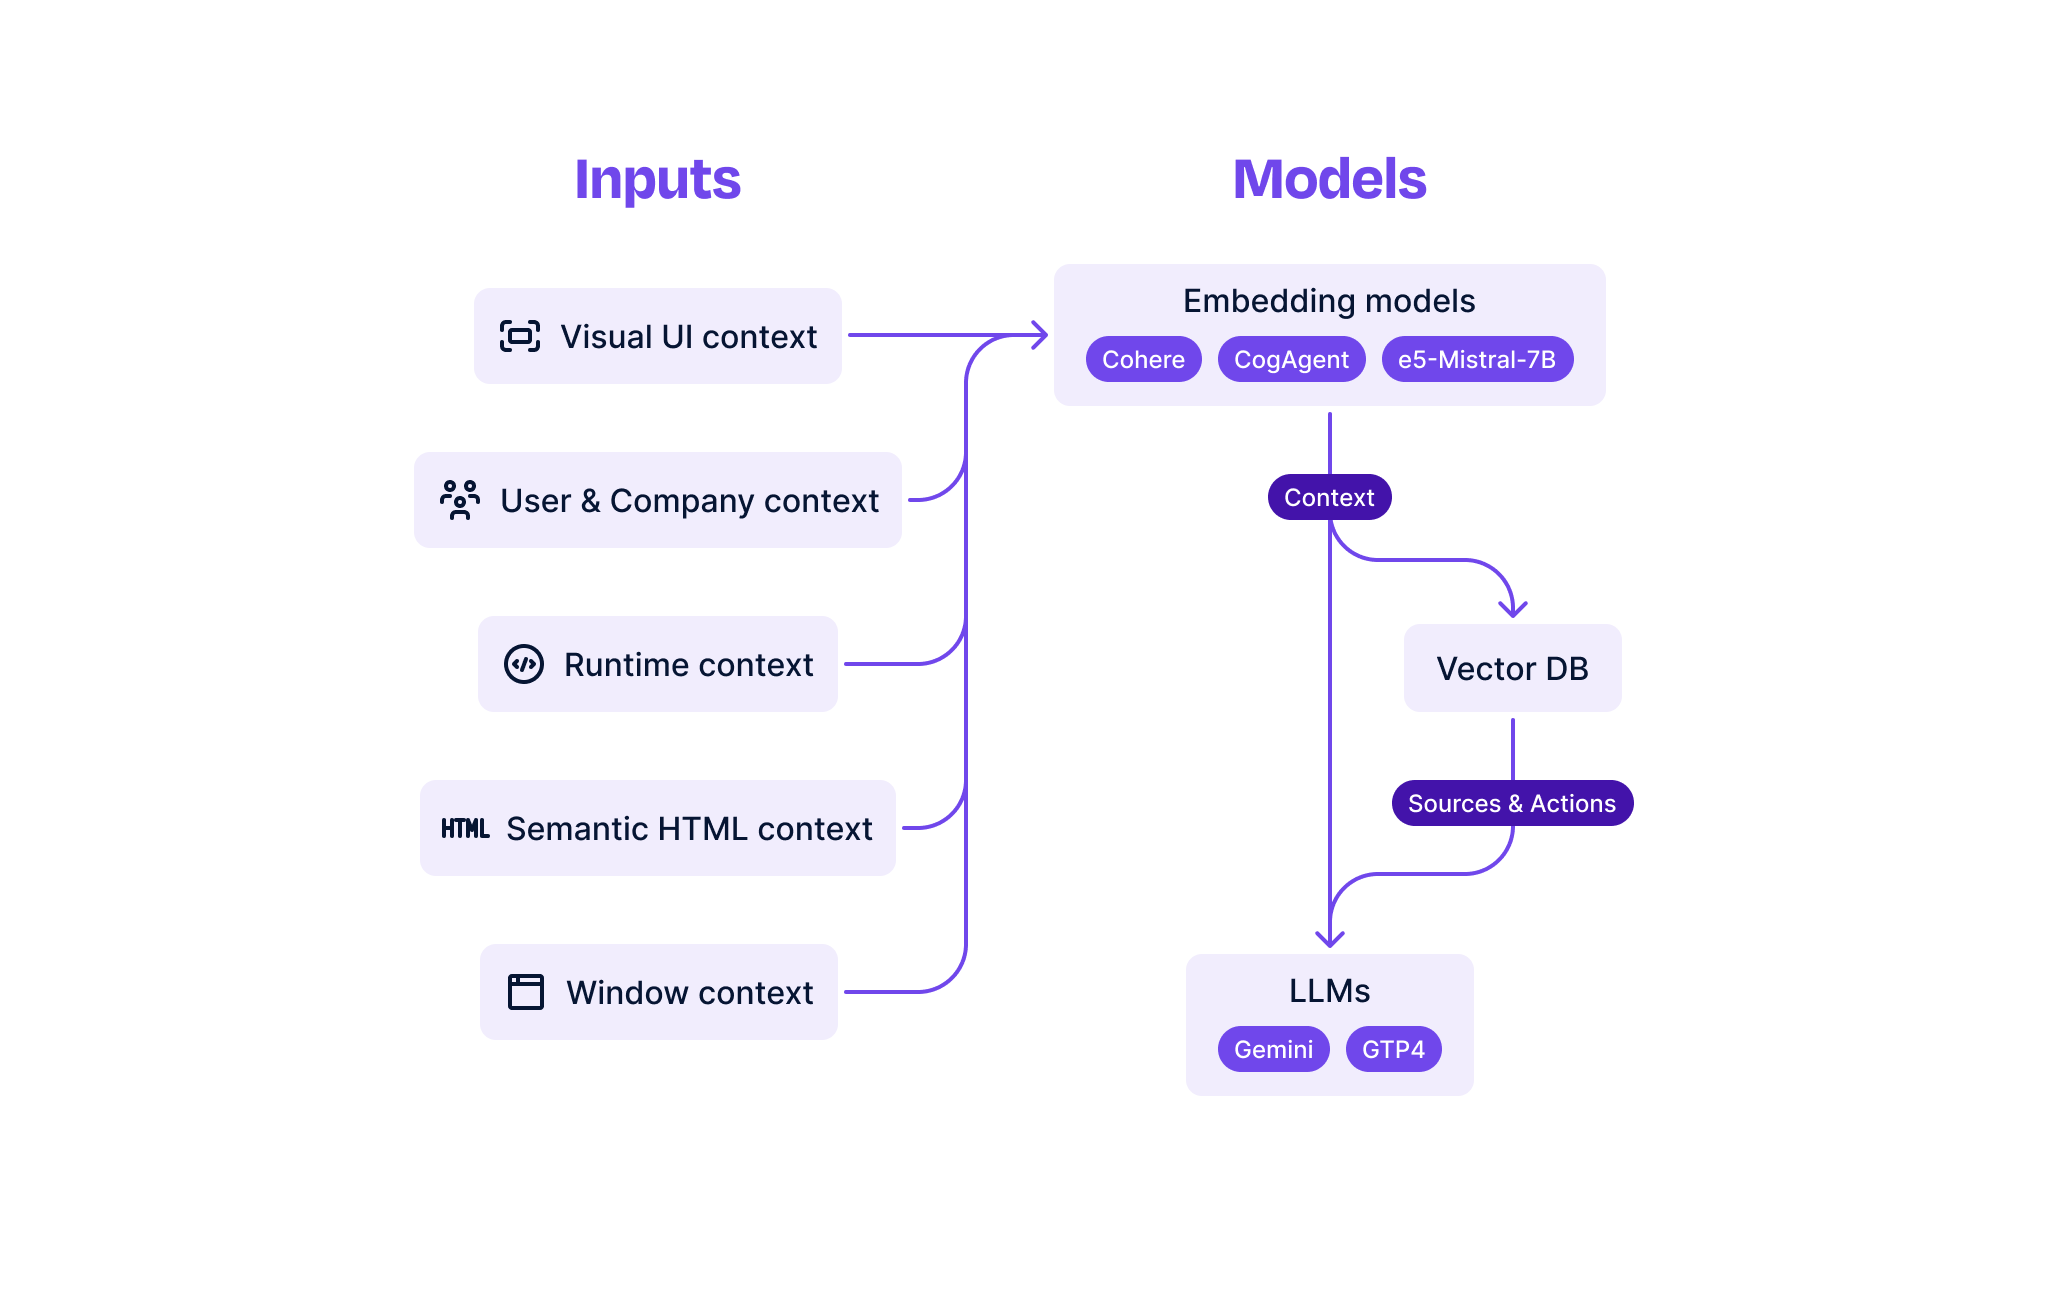 Inputs and ML models diagram